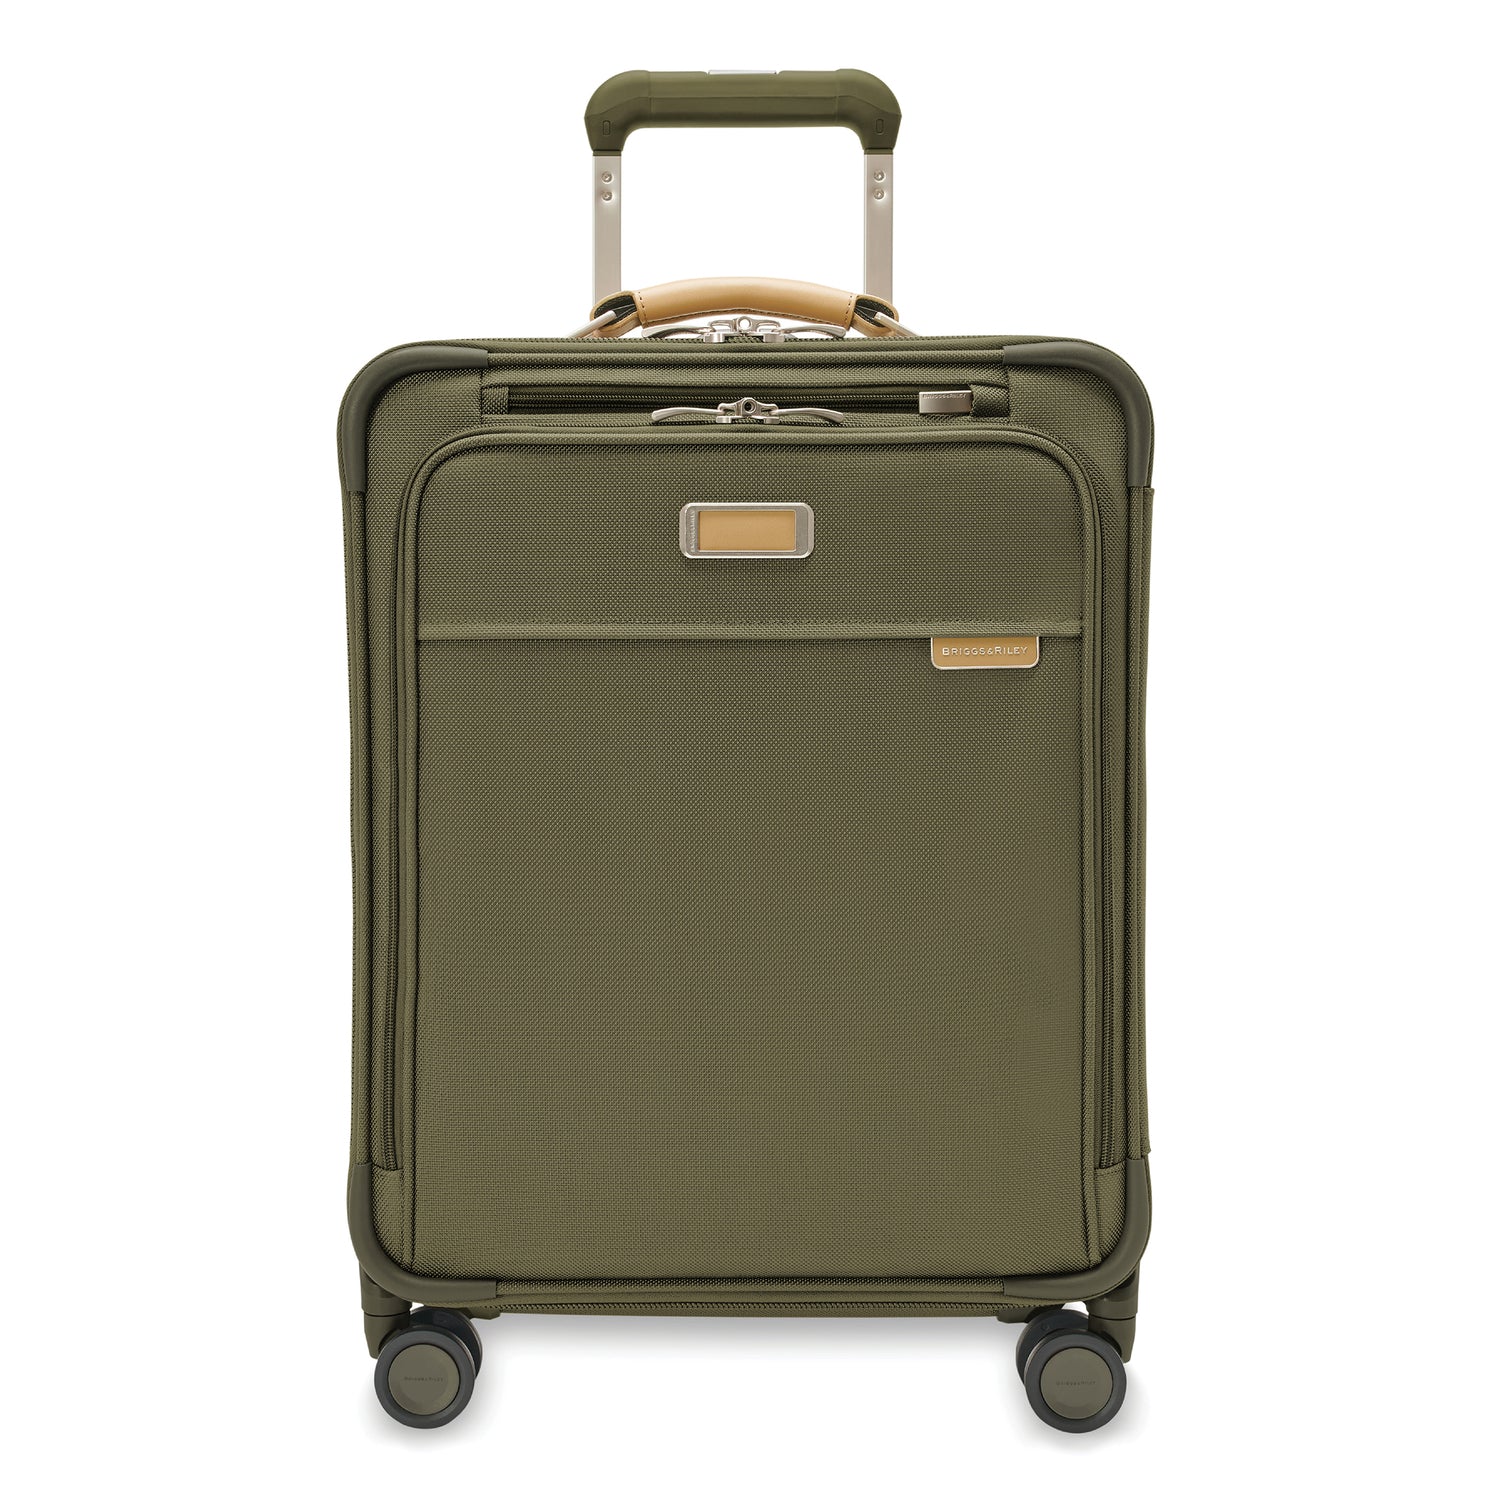 High-End Luggage | Shop Lifetime Guarantee Luxury Travel Luggage 